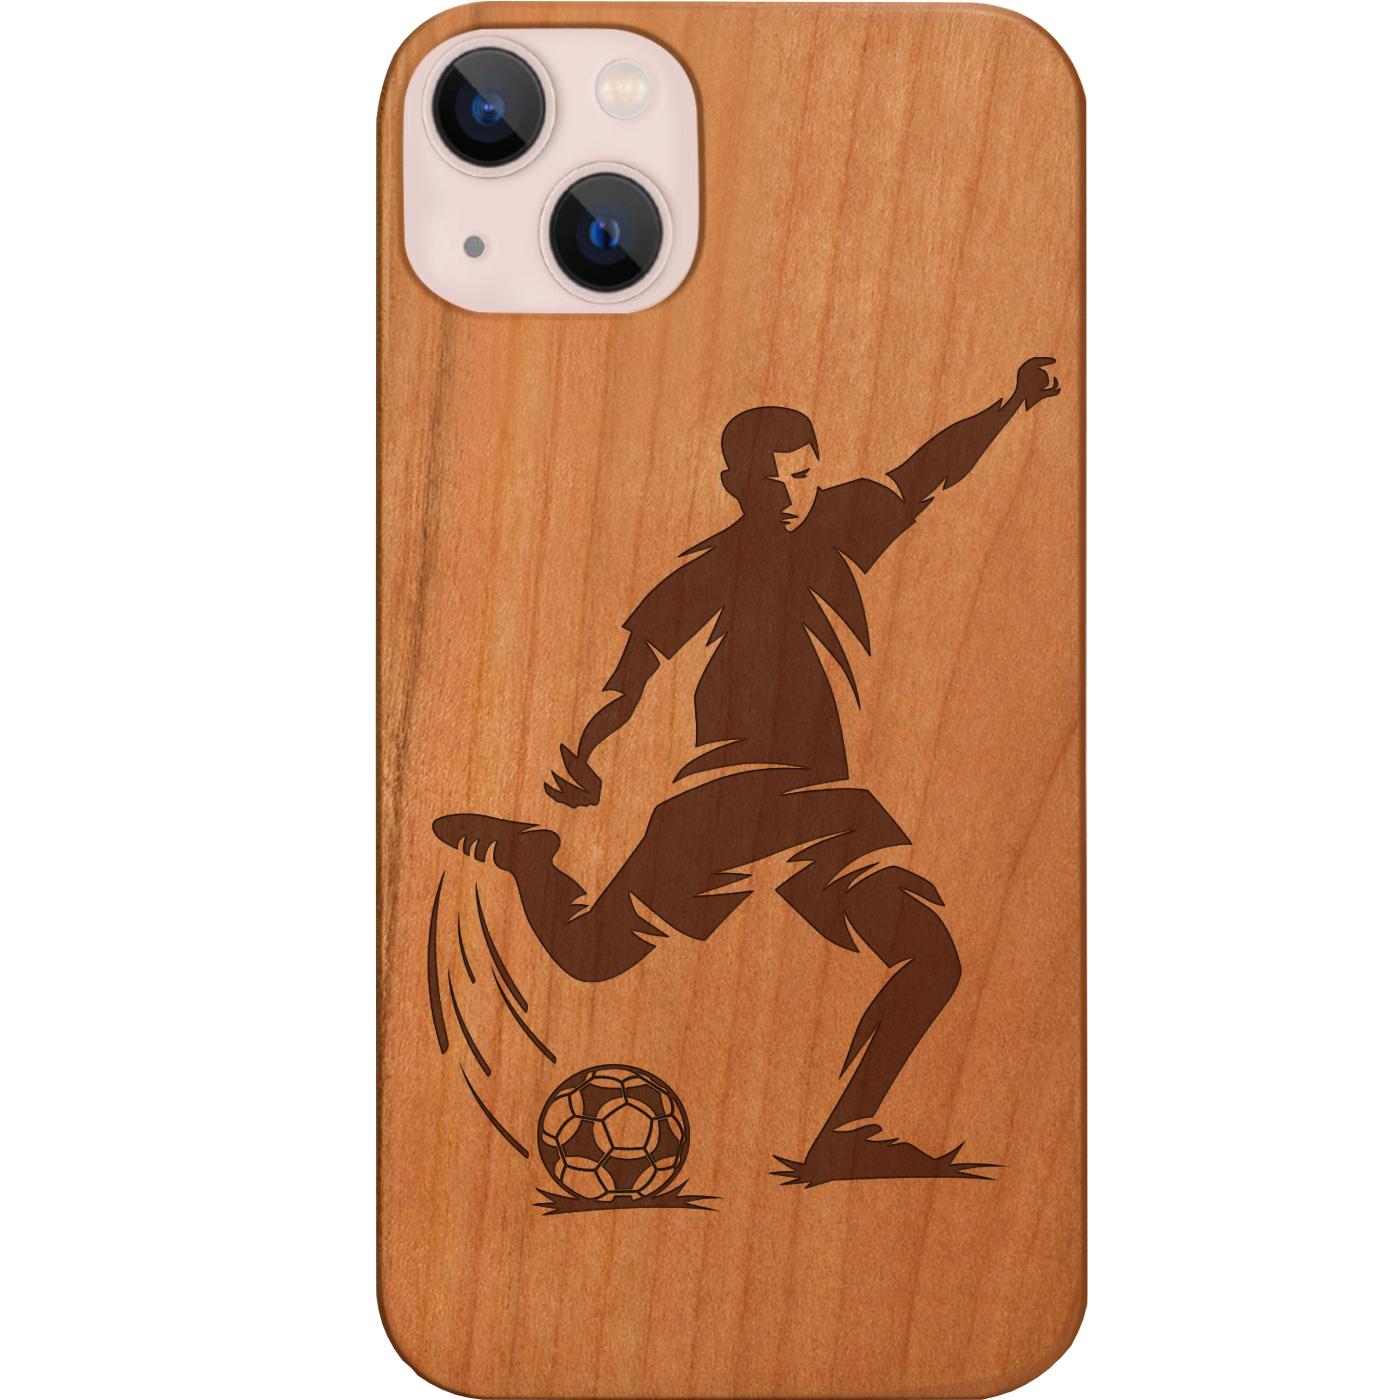 Soccer Player Kicking Ball - Engraved Phone Case